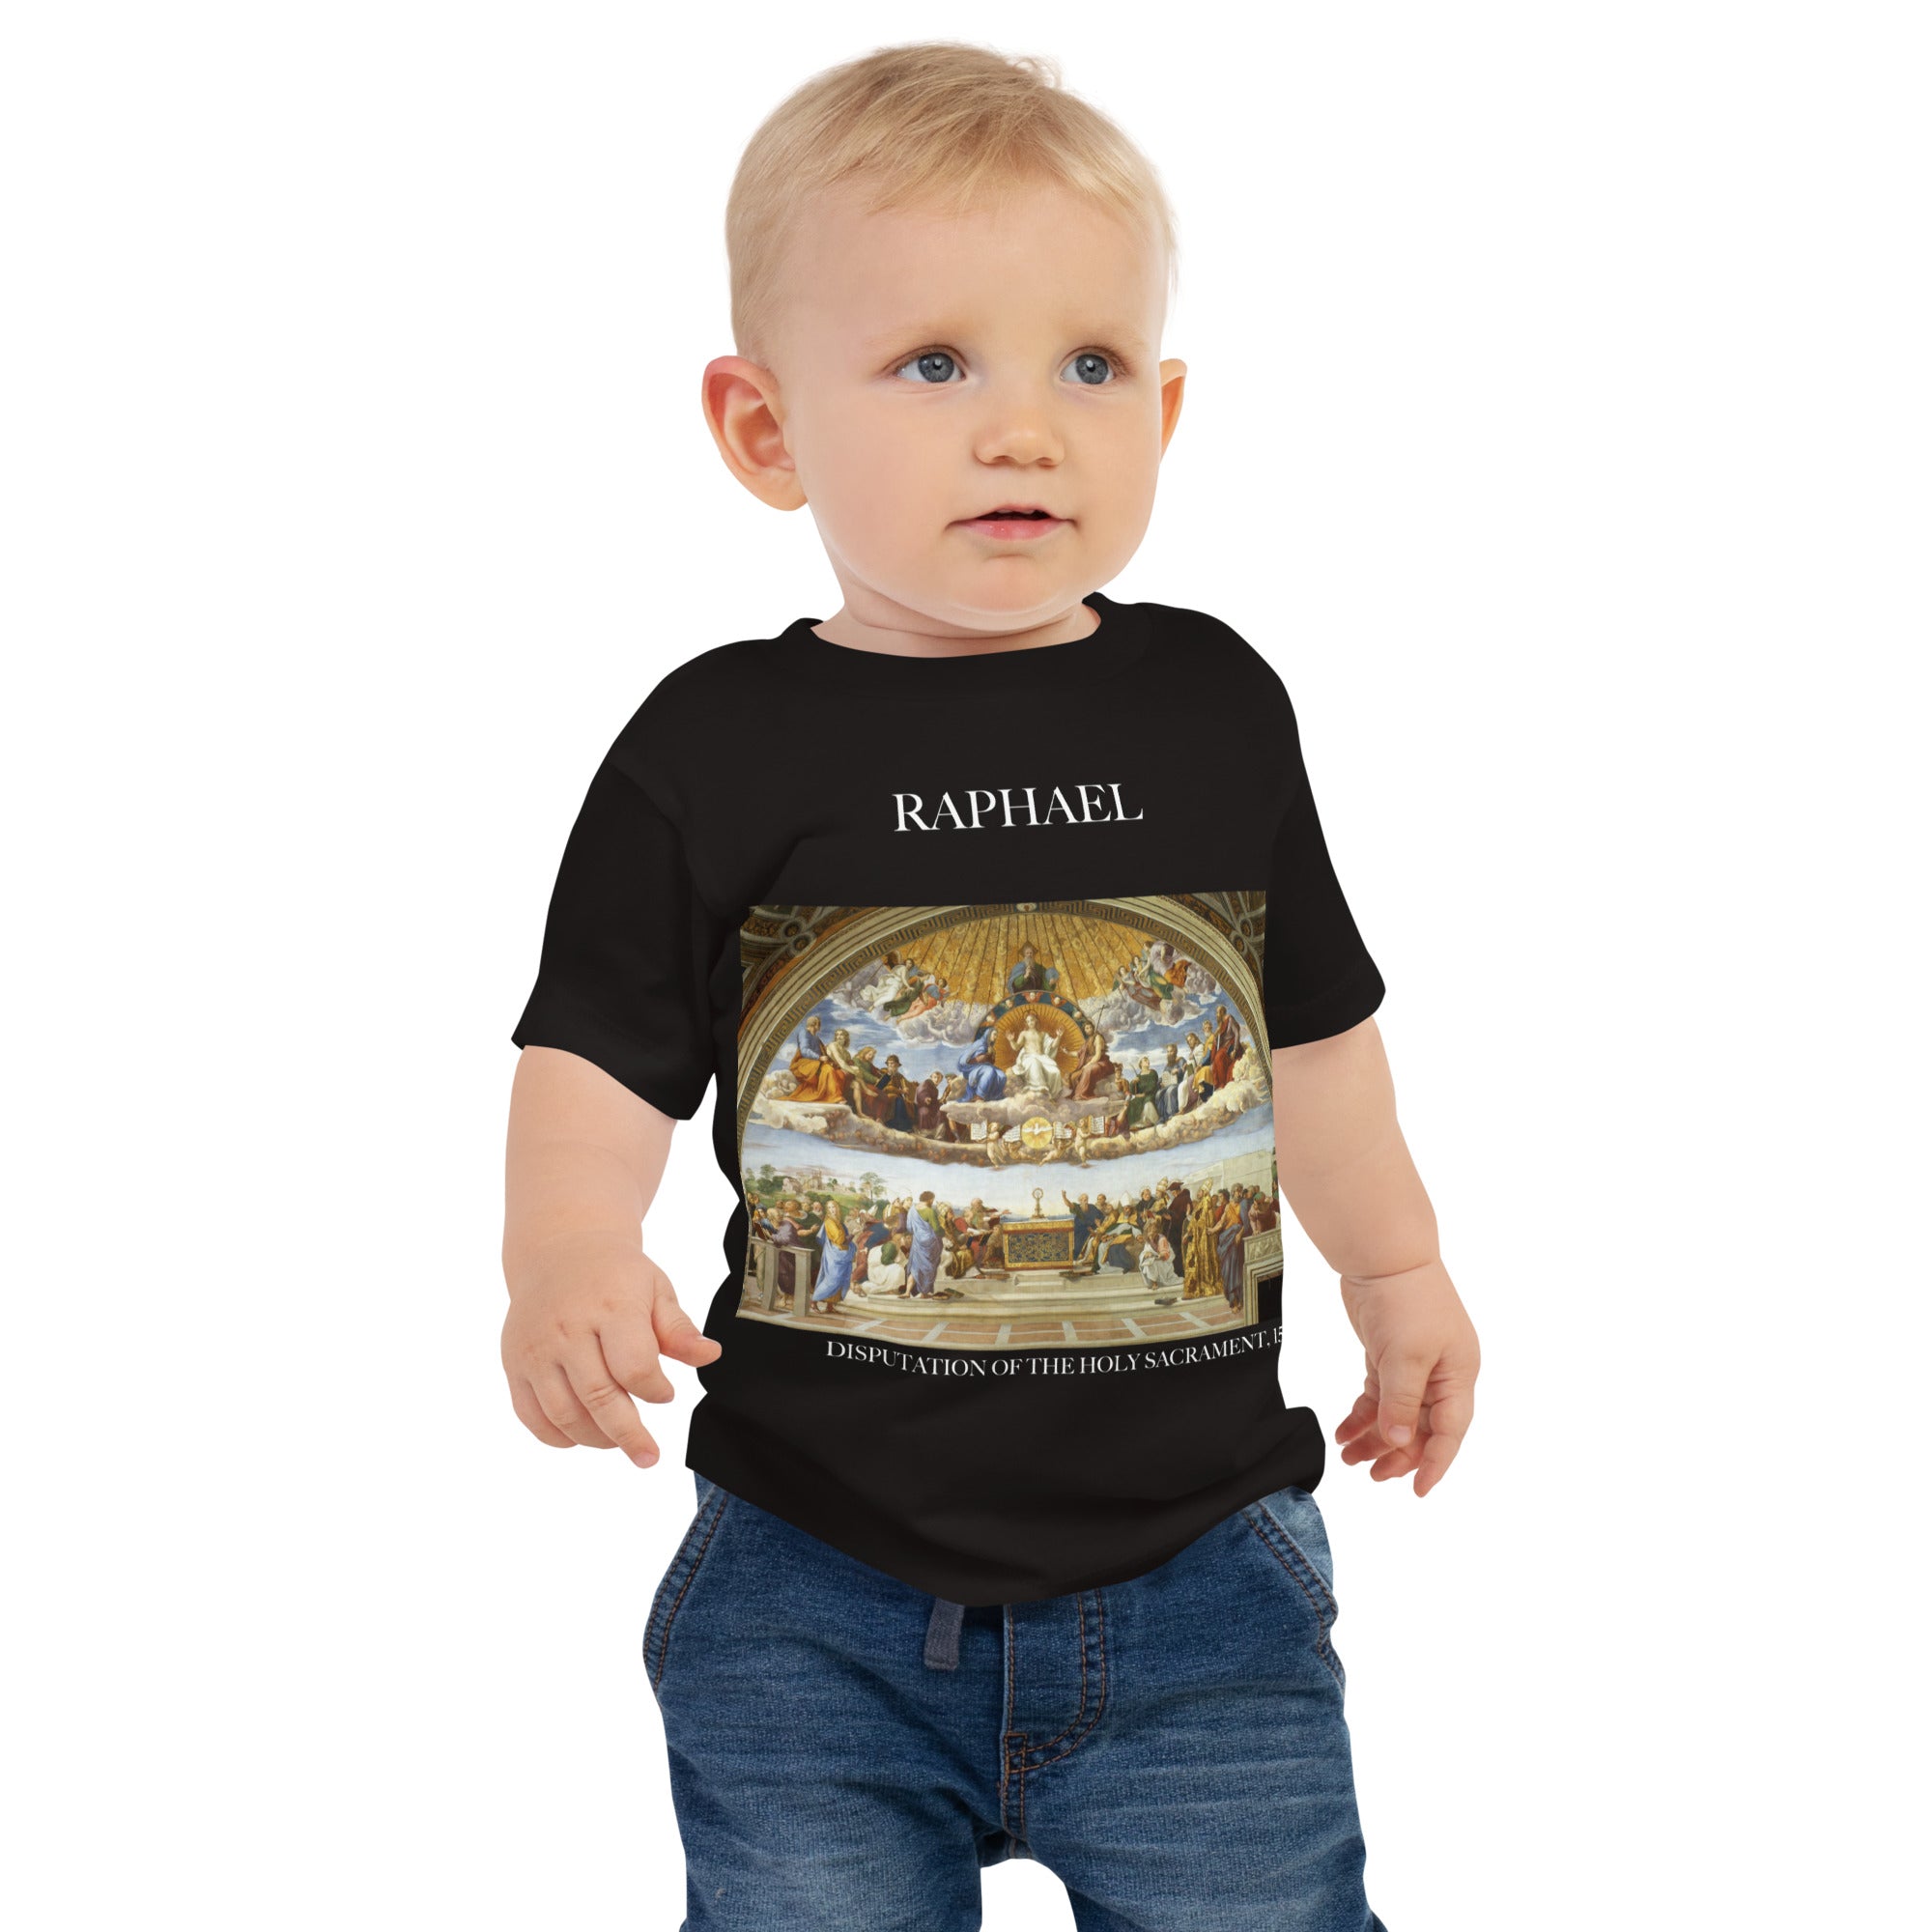 Raphael 'Disputation of the Holy Sacrament' Famous Painting Baby Staple T-Shirt | Premium Baby Art Tee